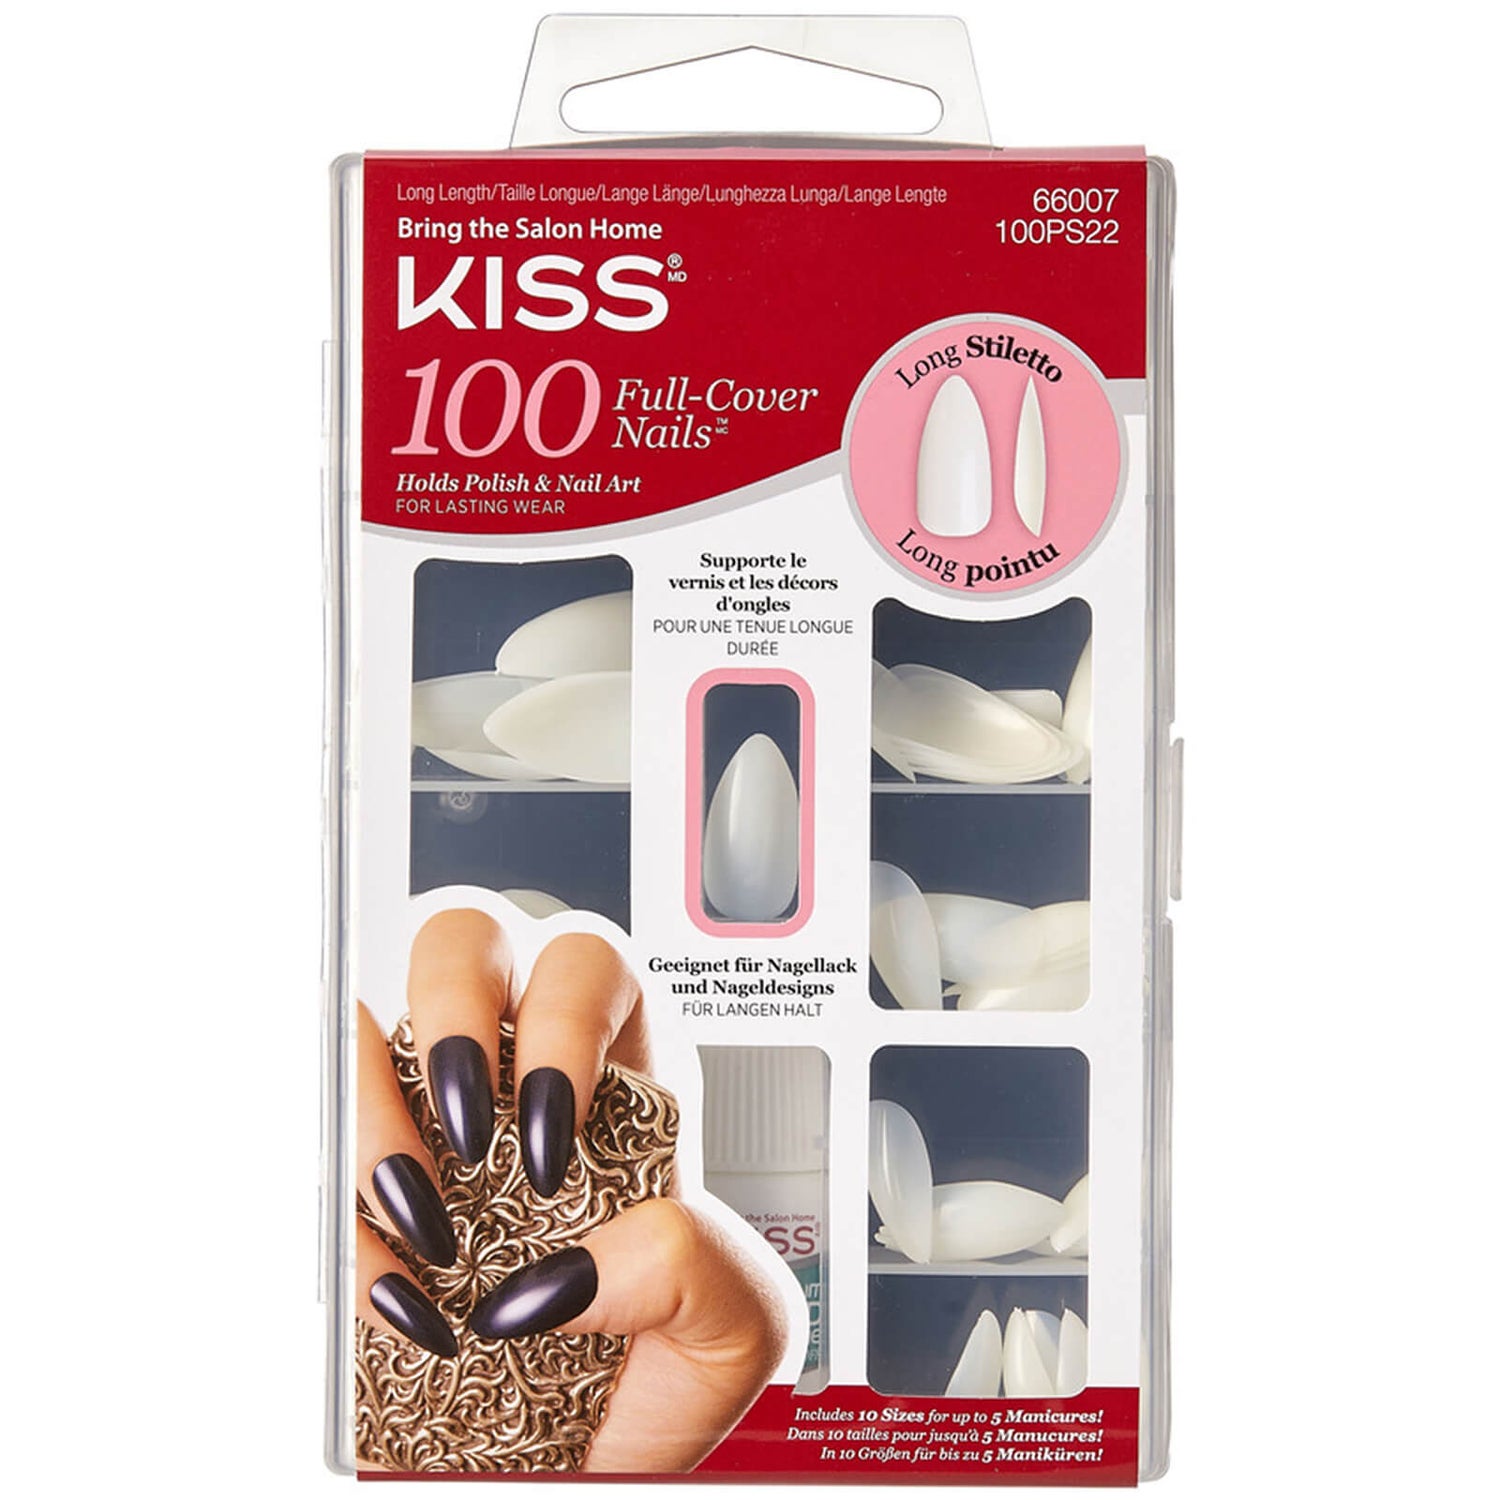 Kiss 100 Nails - Long Stiletto